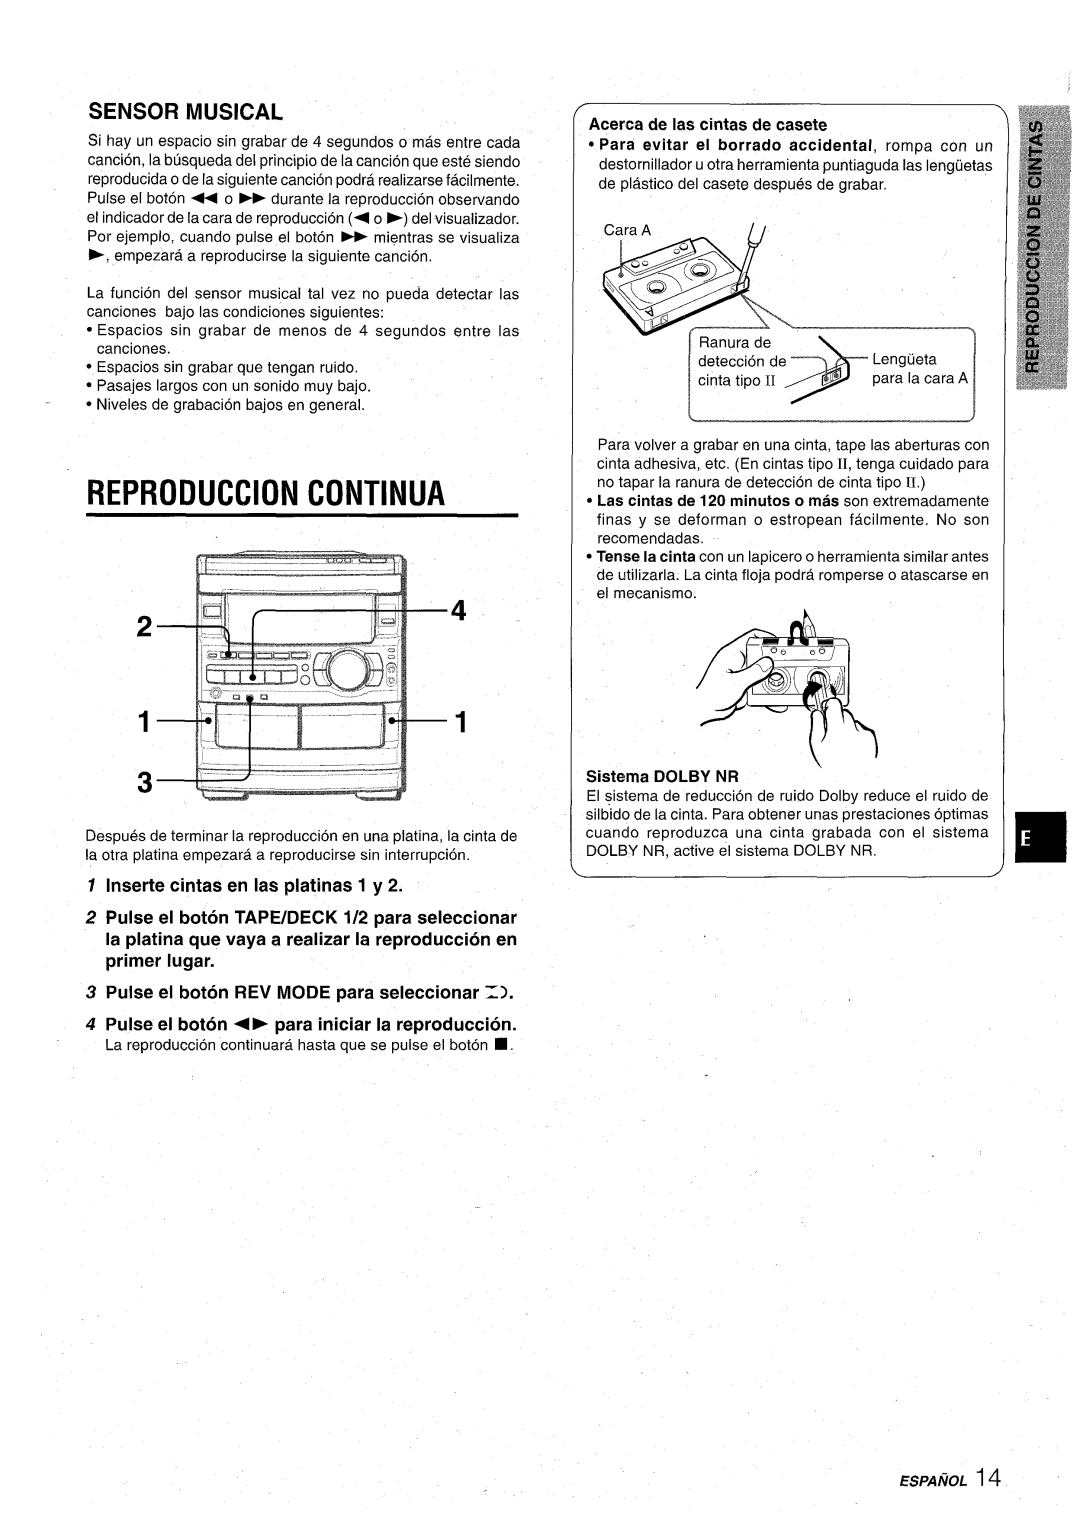 Aiwa CX-NA92 manual Reproduction Continua, t 3 ~C -“, Sensor Musical, lnserte cintas en Ias platinas 1 y, Sistema DOLBY NR 